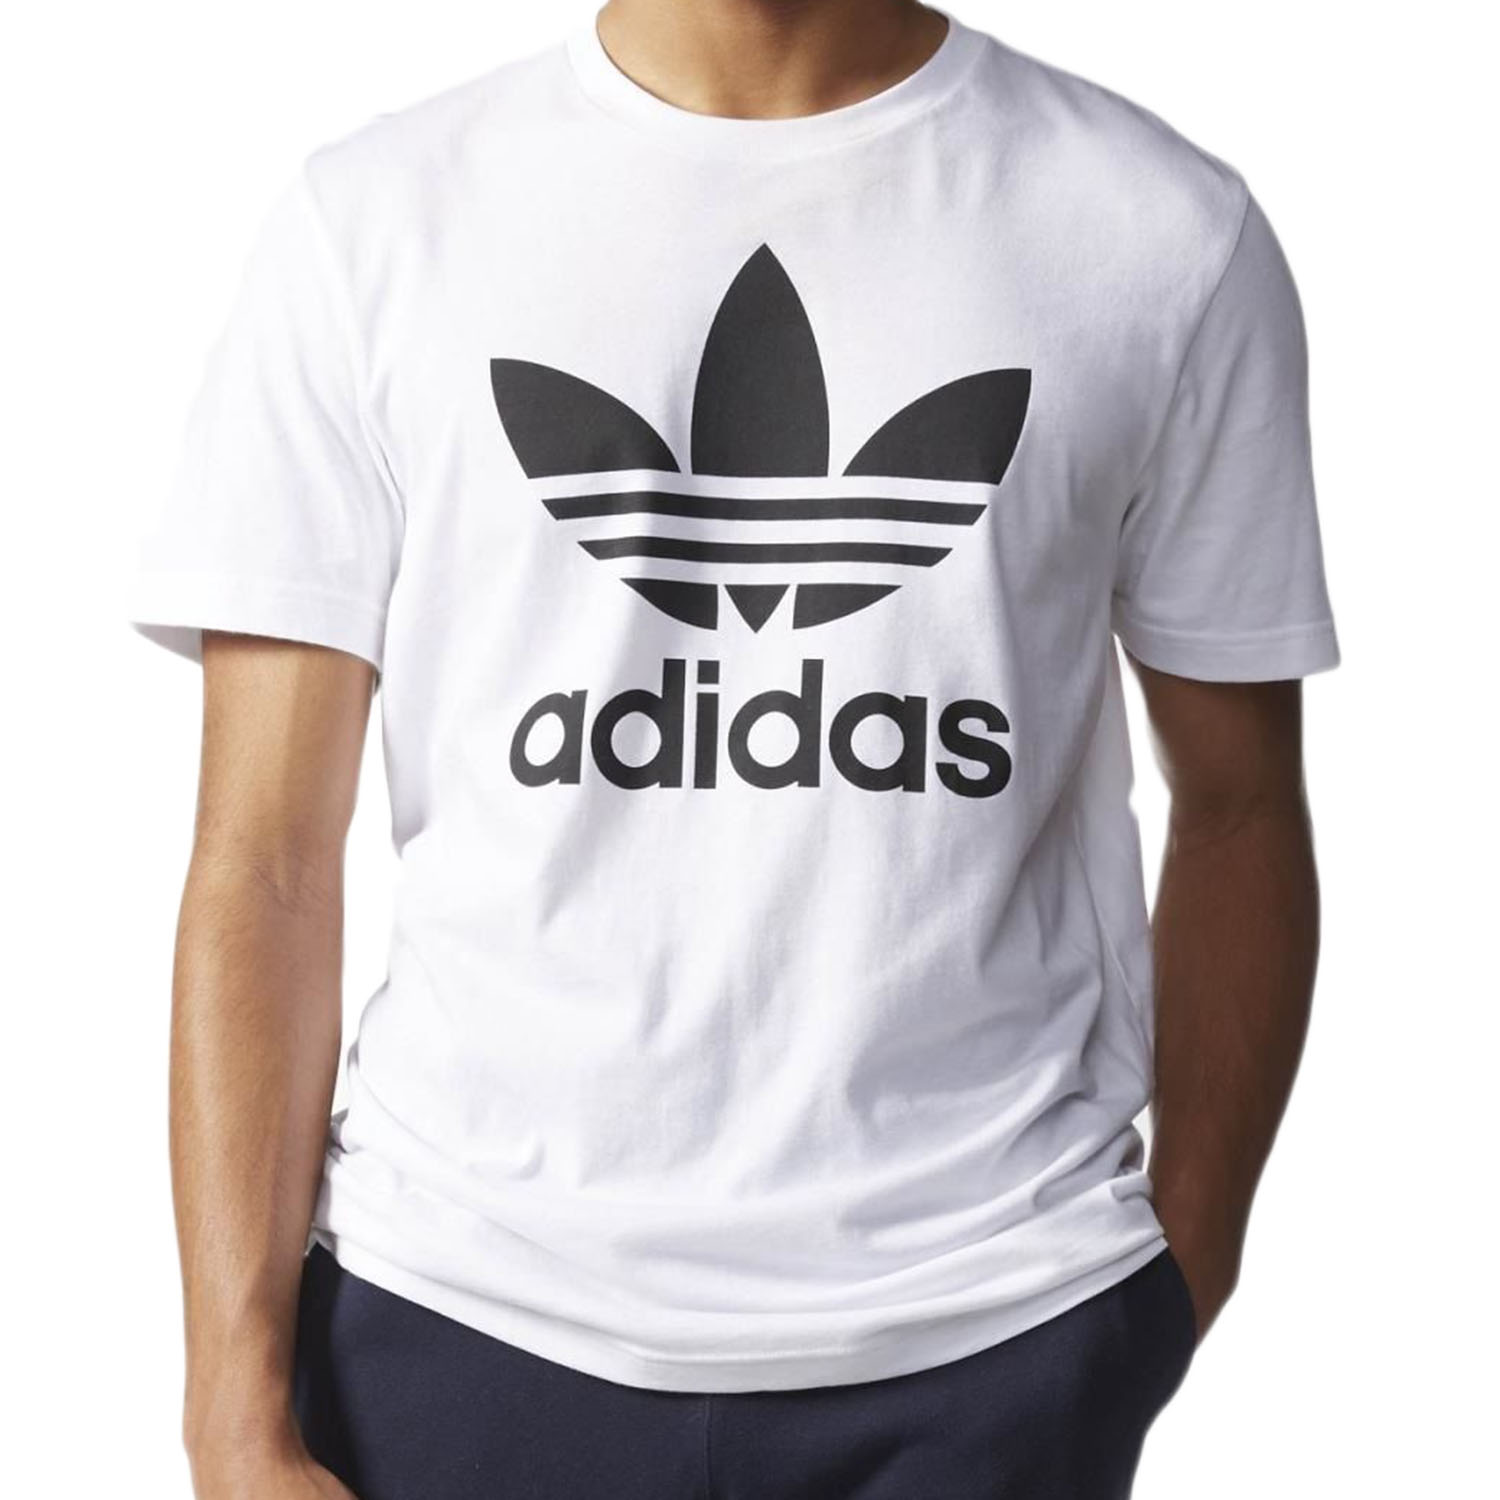 Adidas Originals Trefoil Men's Tee White-Black aj8828 | eBay